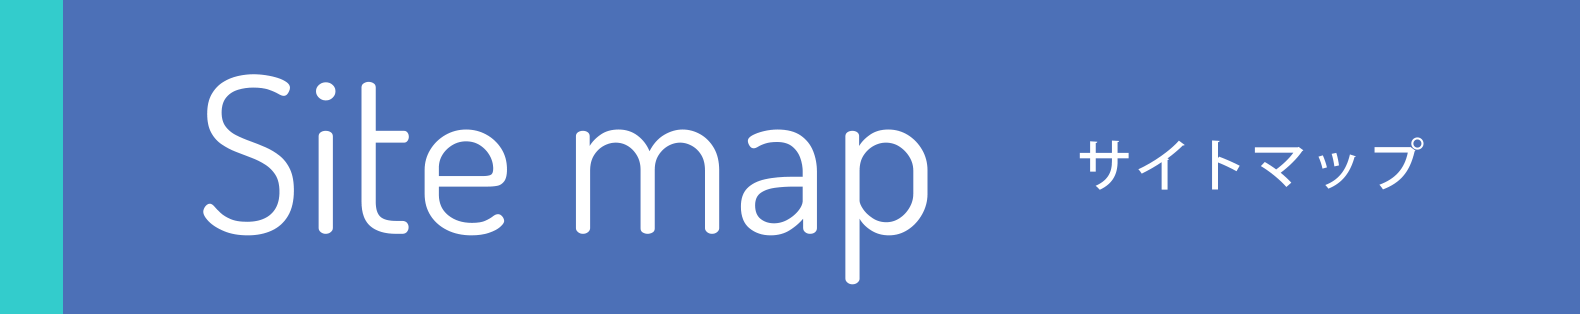 Site map サイトマップ